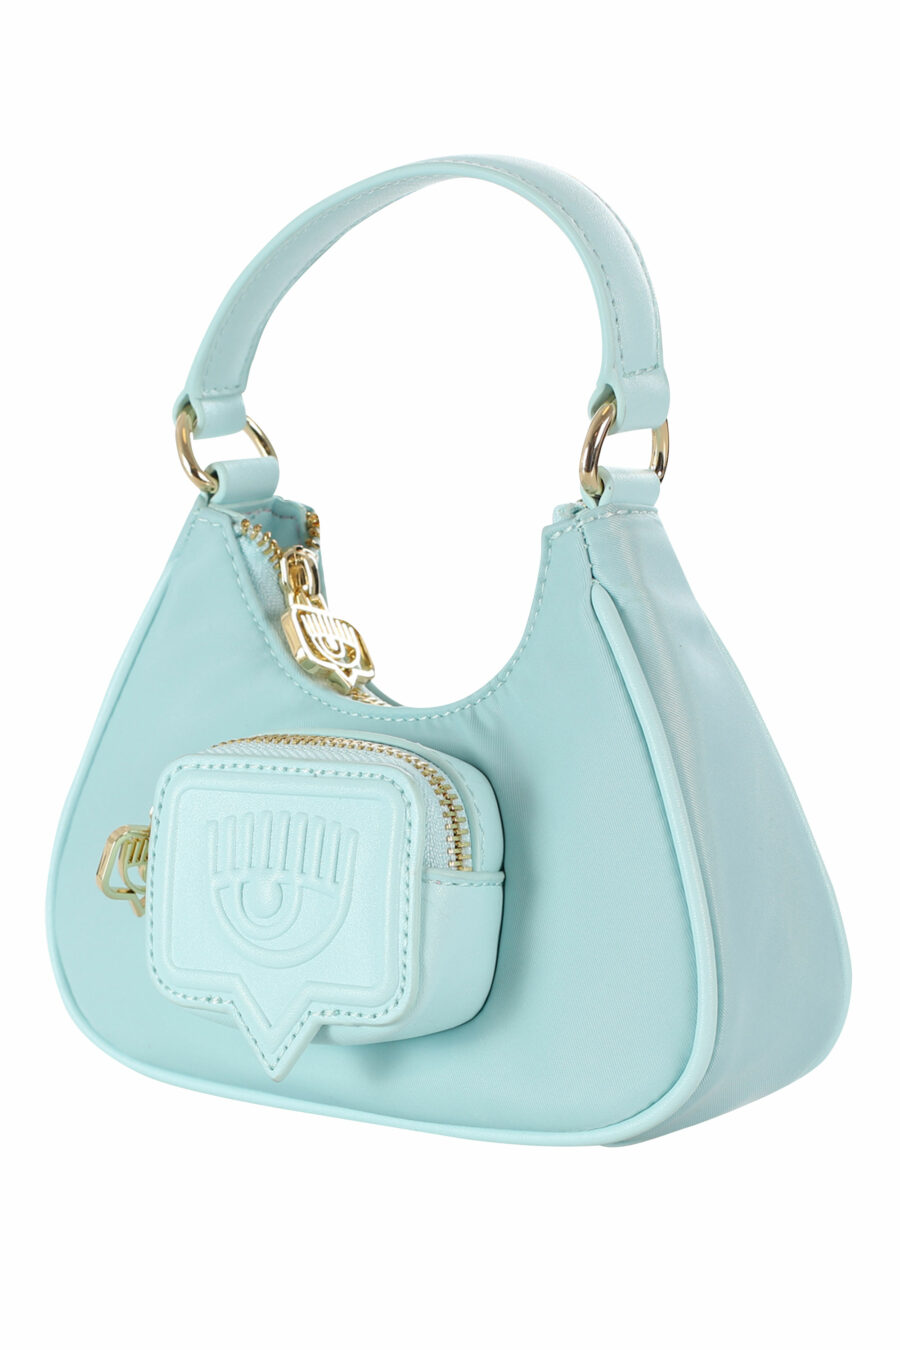 Mini light blue hobo style shoulder bag with pocket and monochrome logo - 8052672352095 2